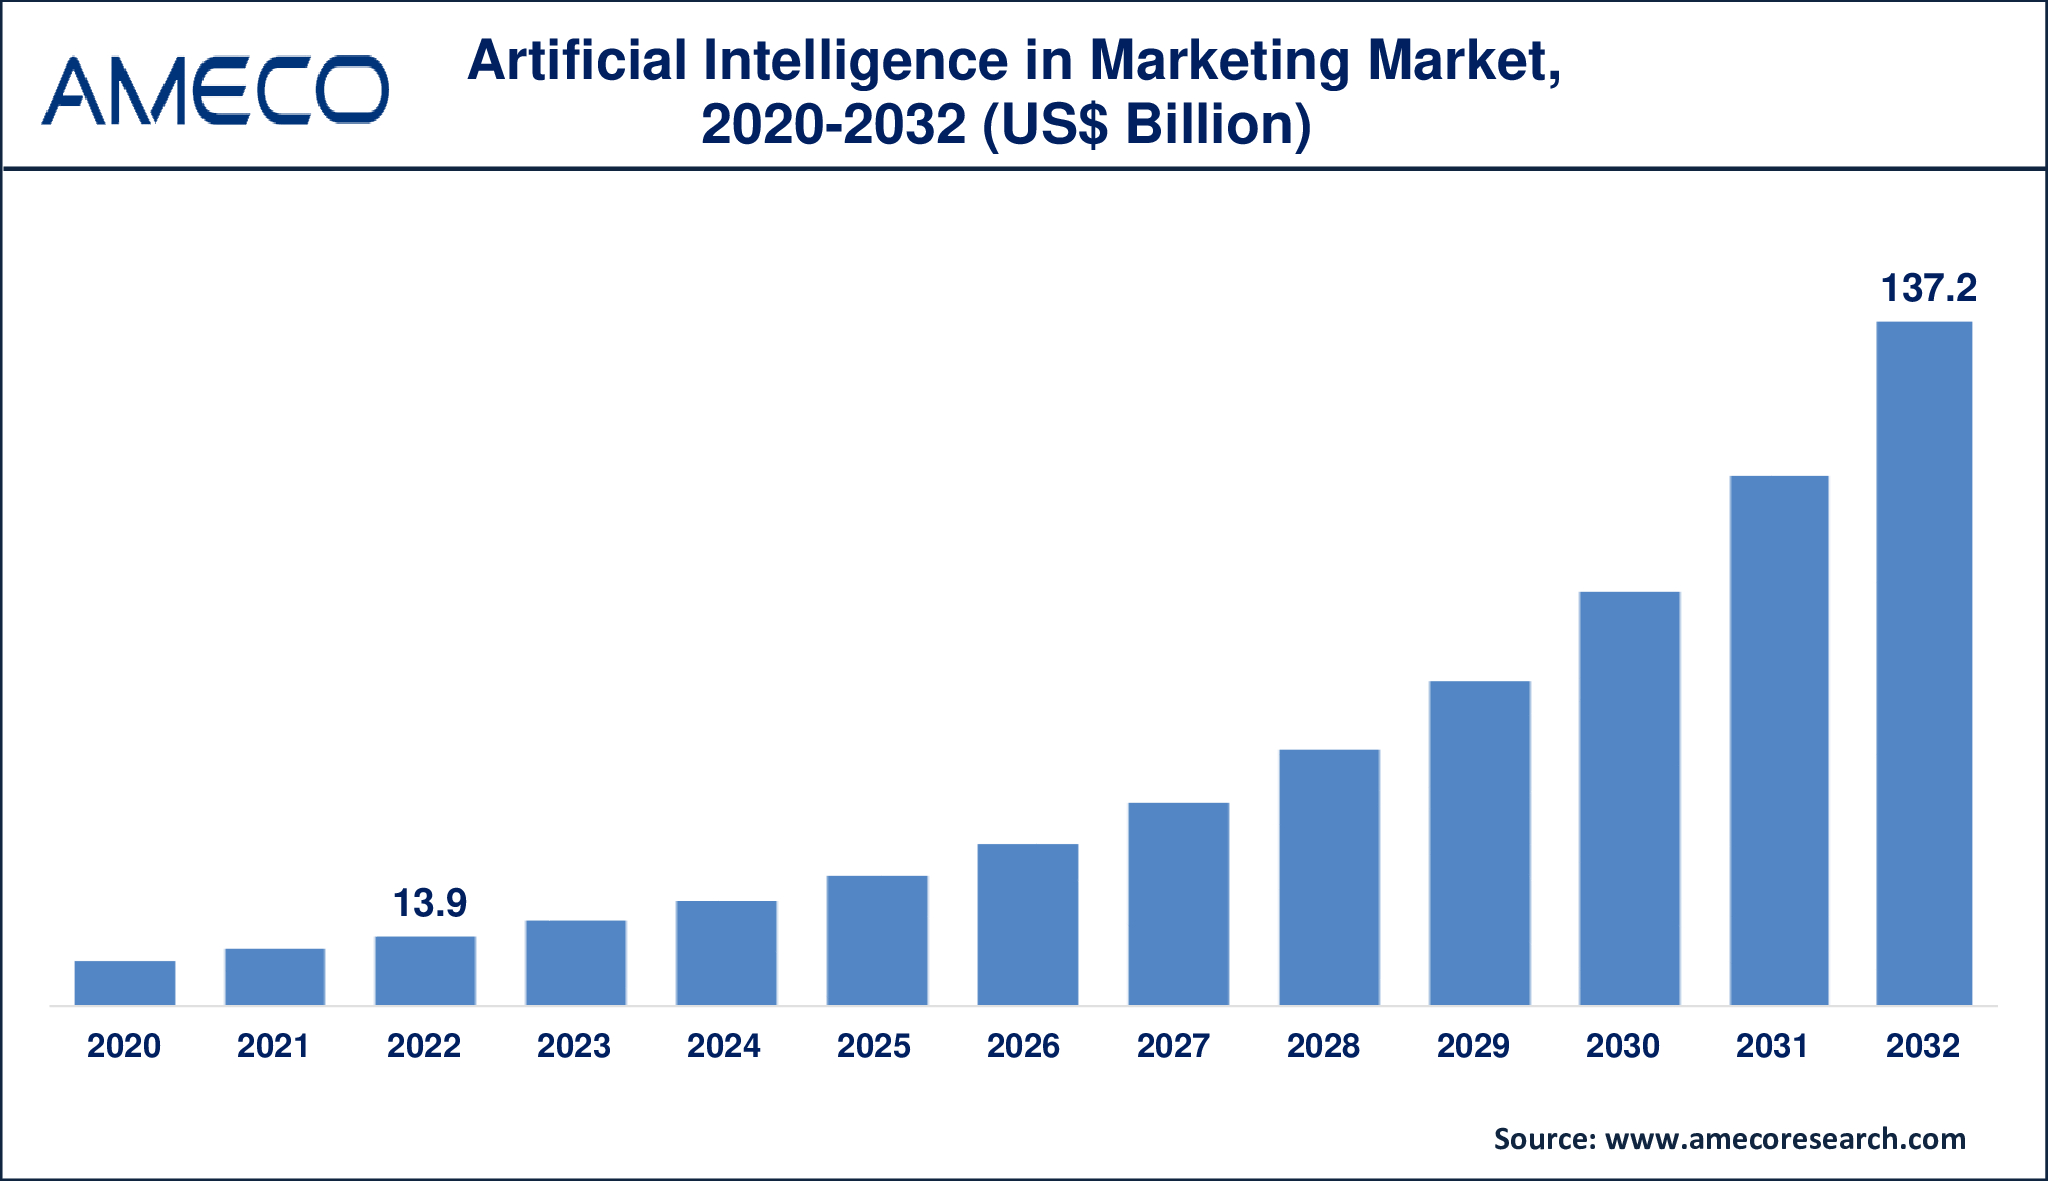  Artificial Intelligence in Marketing Market Size 